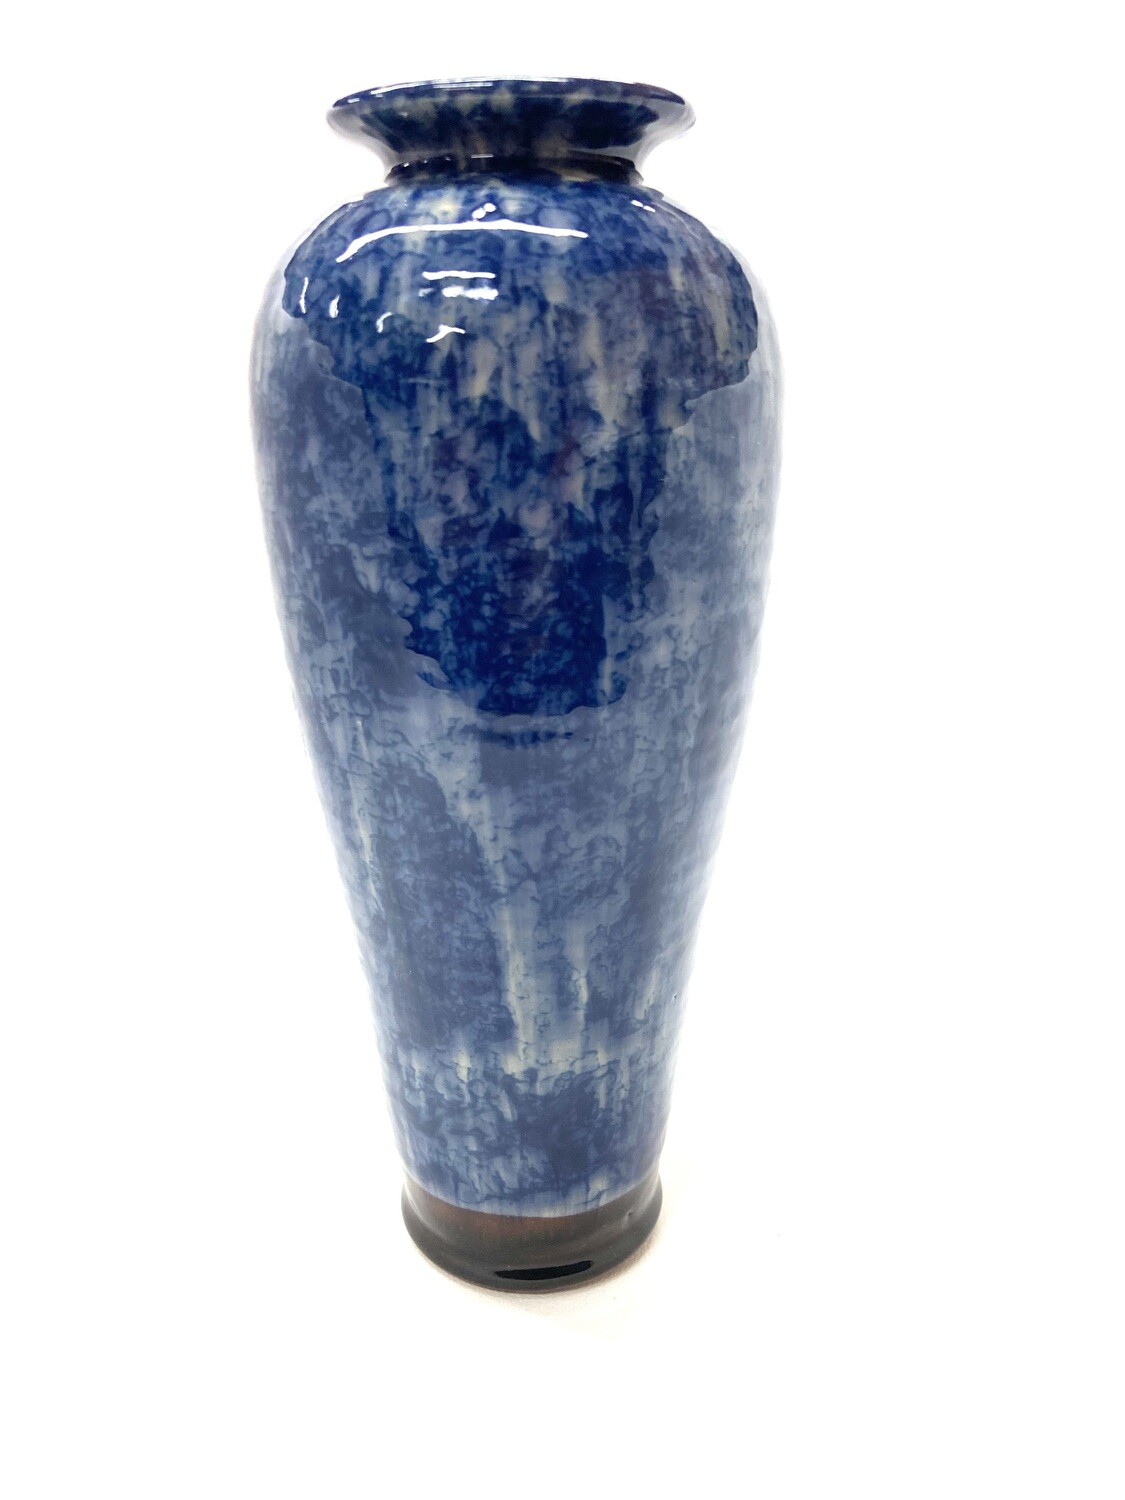 Lge Blue Sponge Narrow Vase - Birdsall-Worthington Pottery 